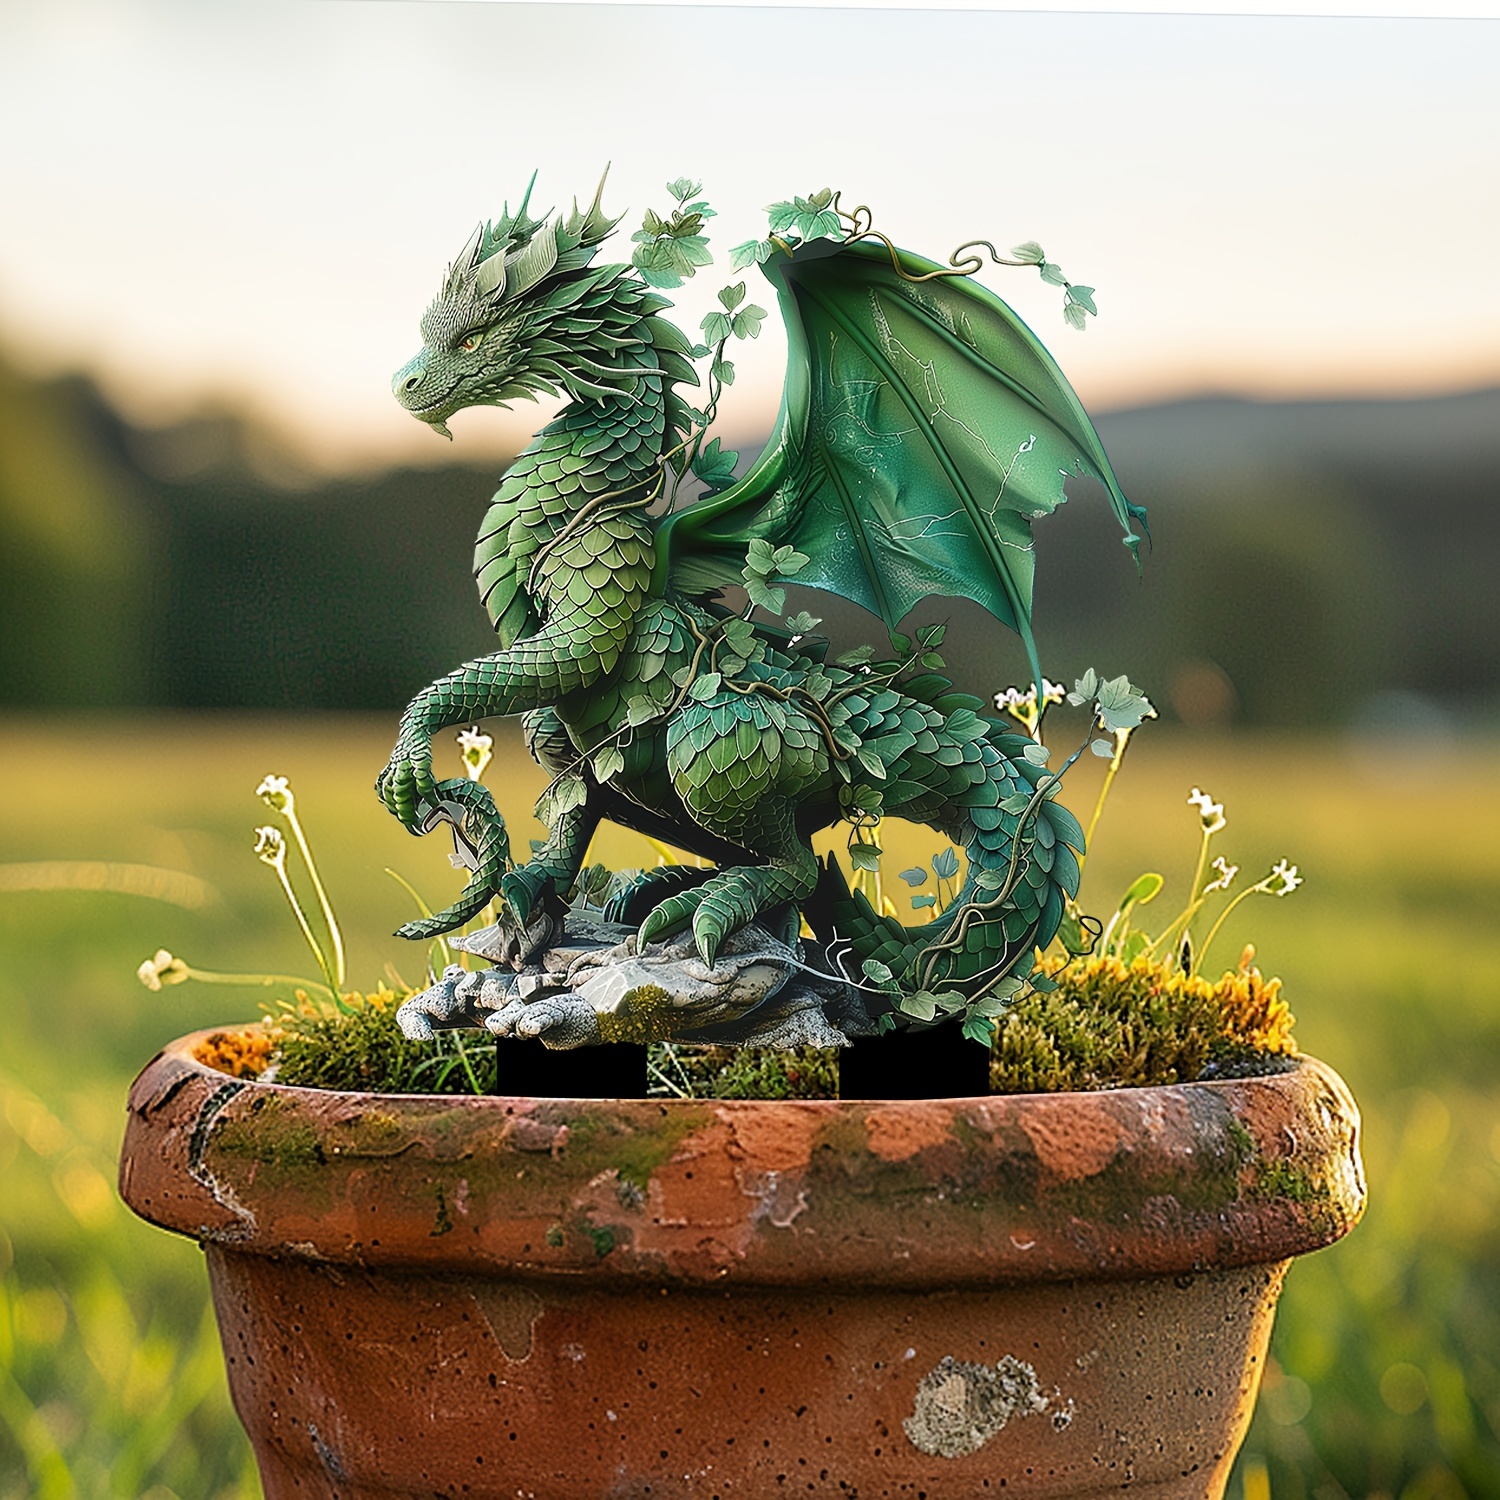 

Green Dragon Acrylic Garden Stake - 11.8"x7" Inspirational Outdoor Decor, Bohemian Style Flower Pot Landscape Accessory With Sun Catcher